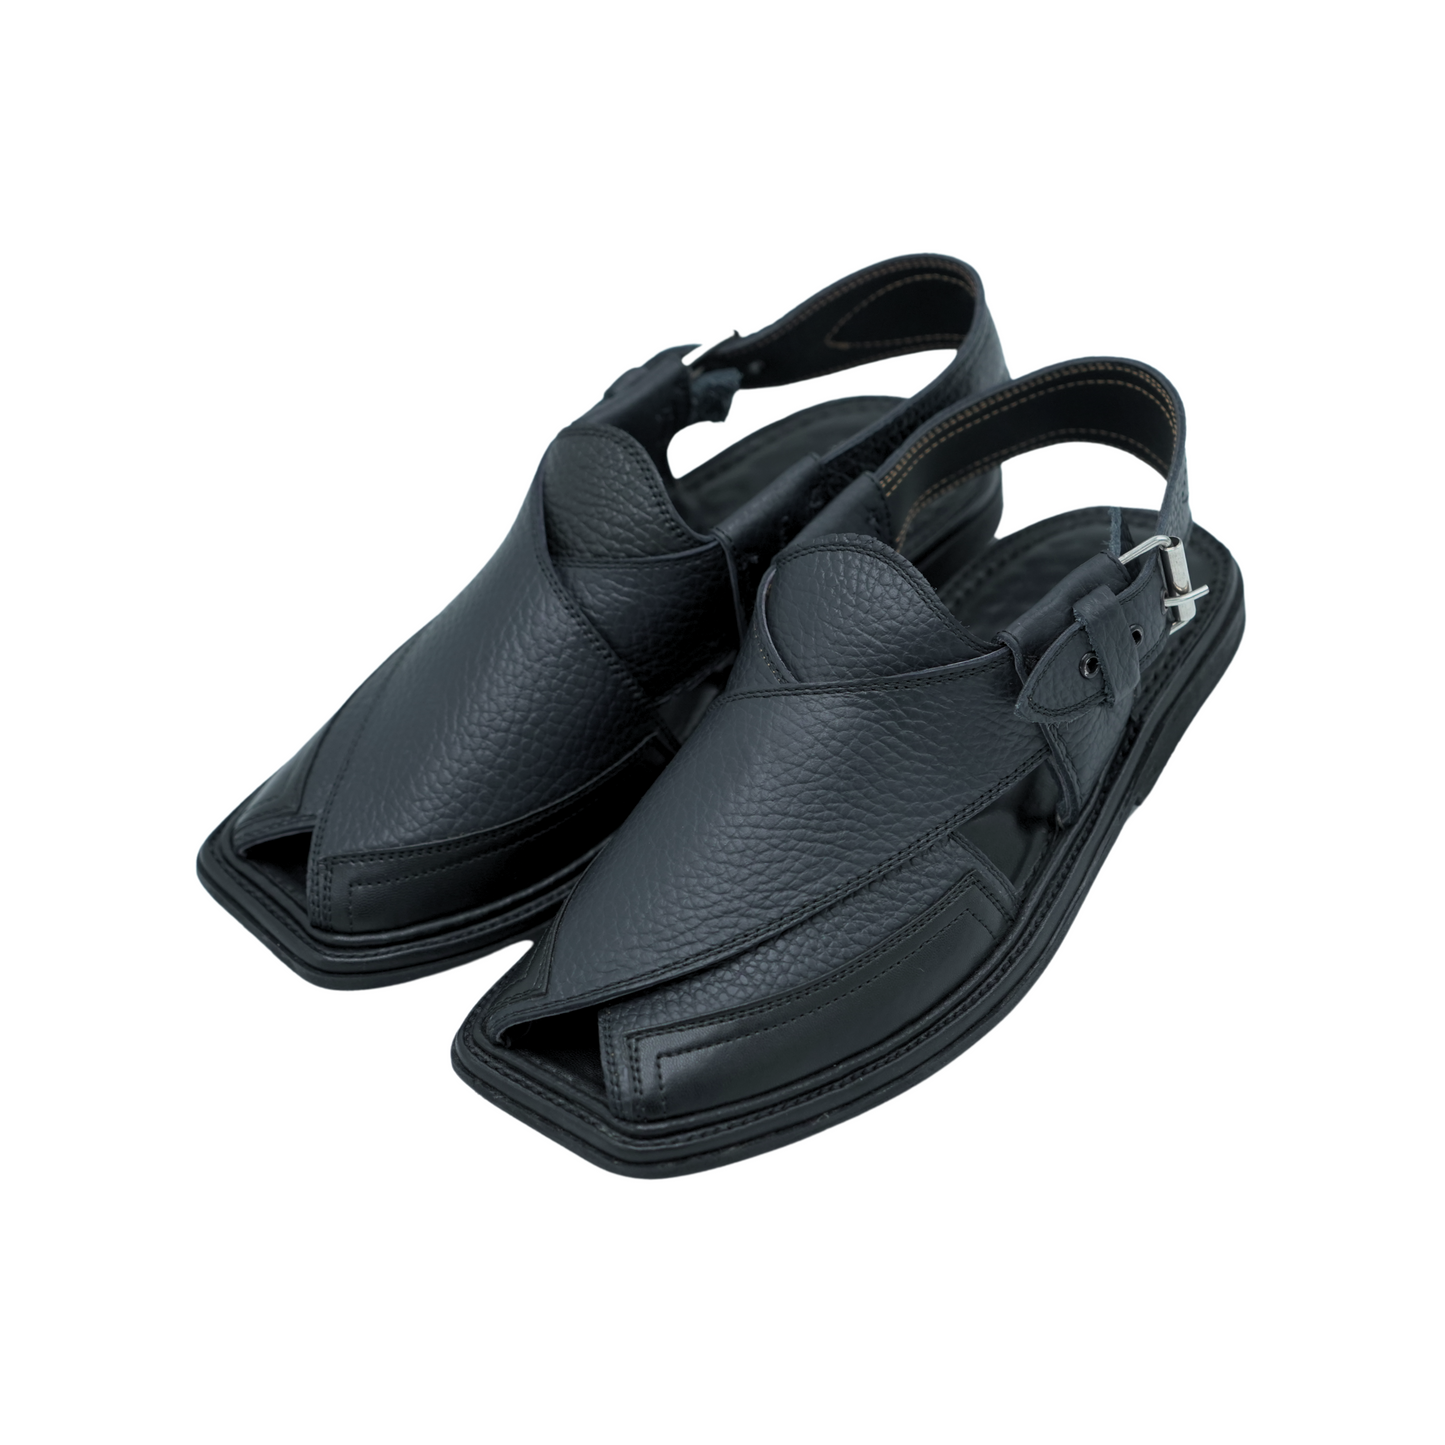 leather peshawari sandals for men